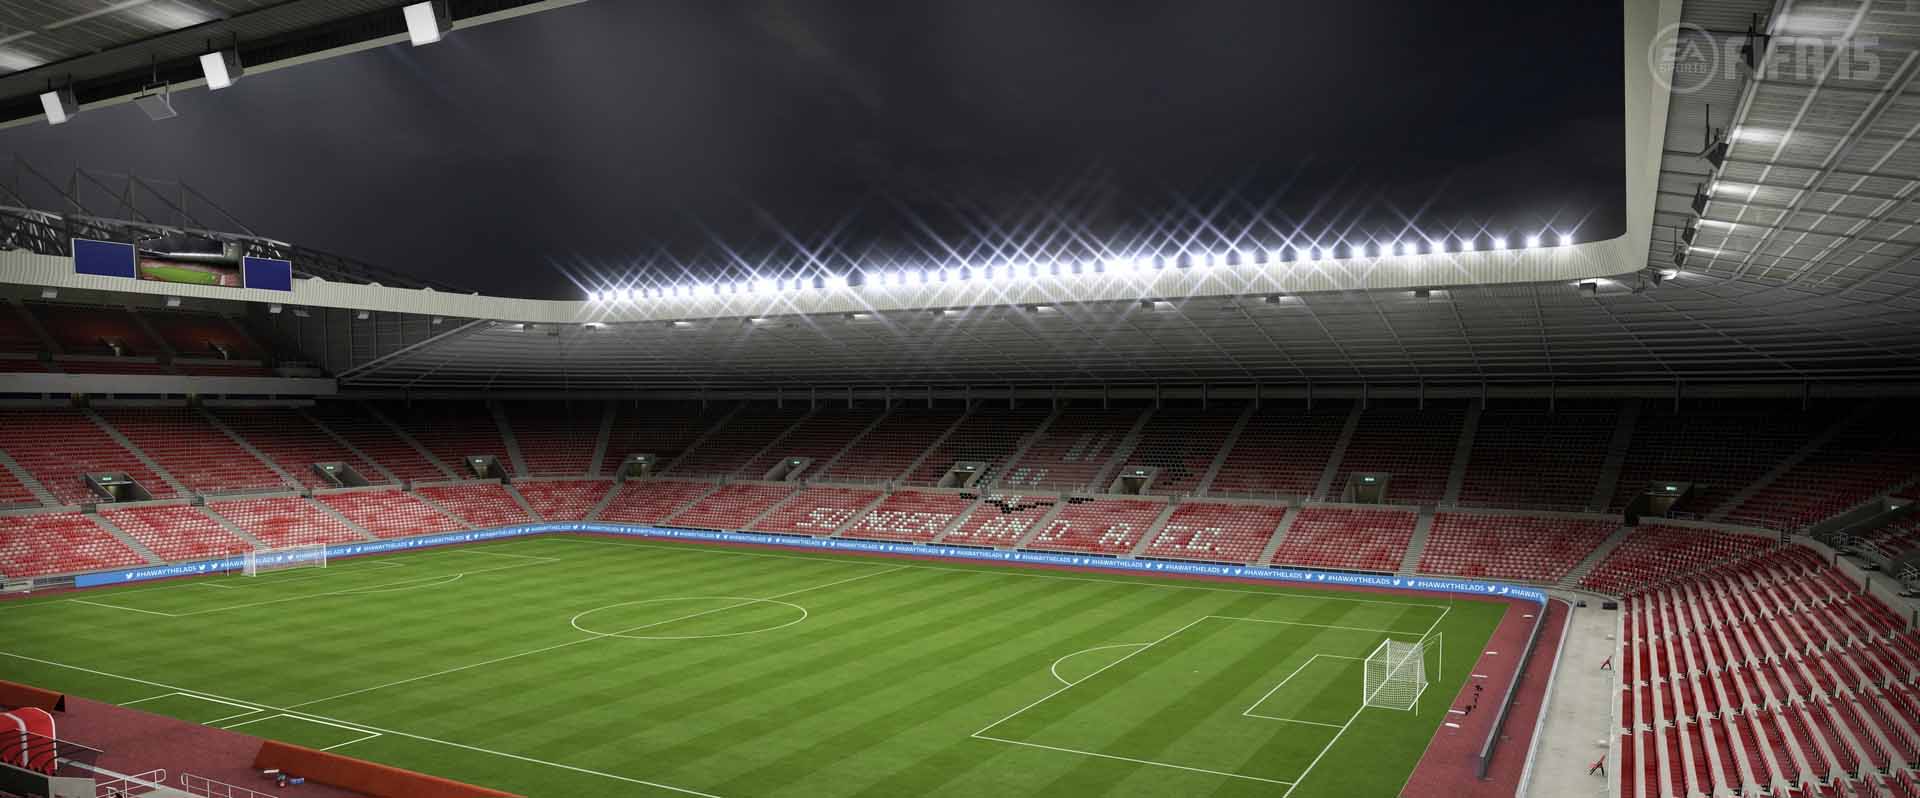 FIFA 15 inclui todos os 20 estádios da Barclays Premier League